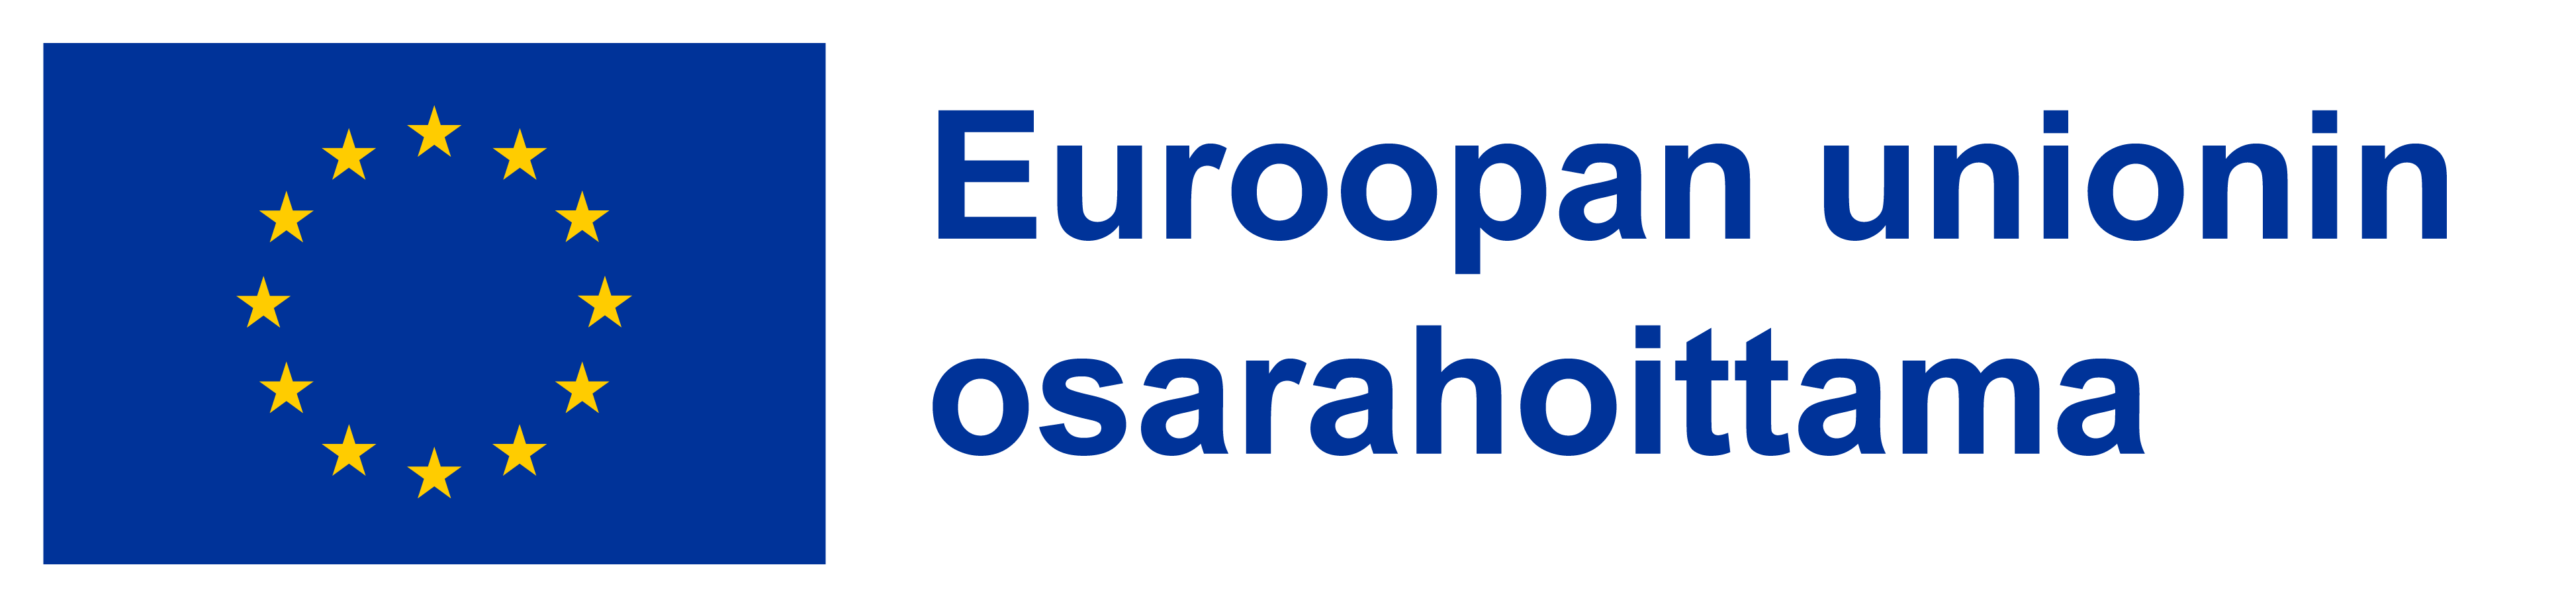 EU:n logo. Euroopan unionin osarahoittama.